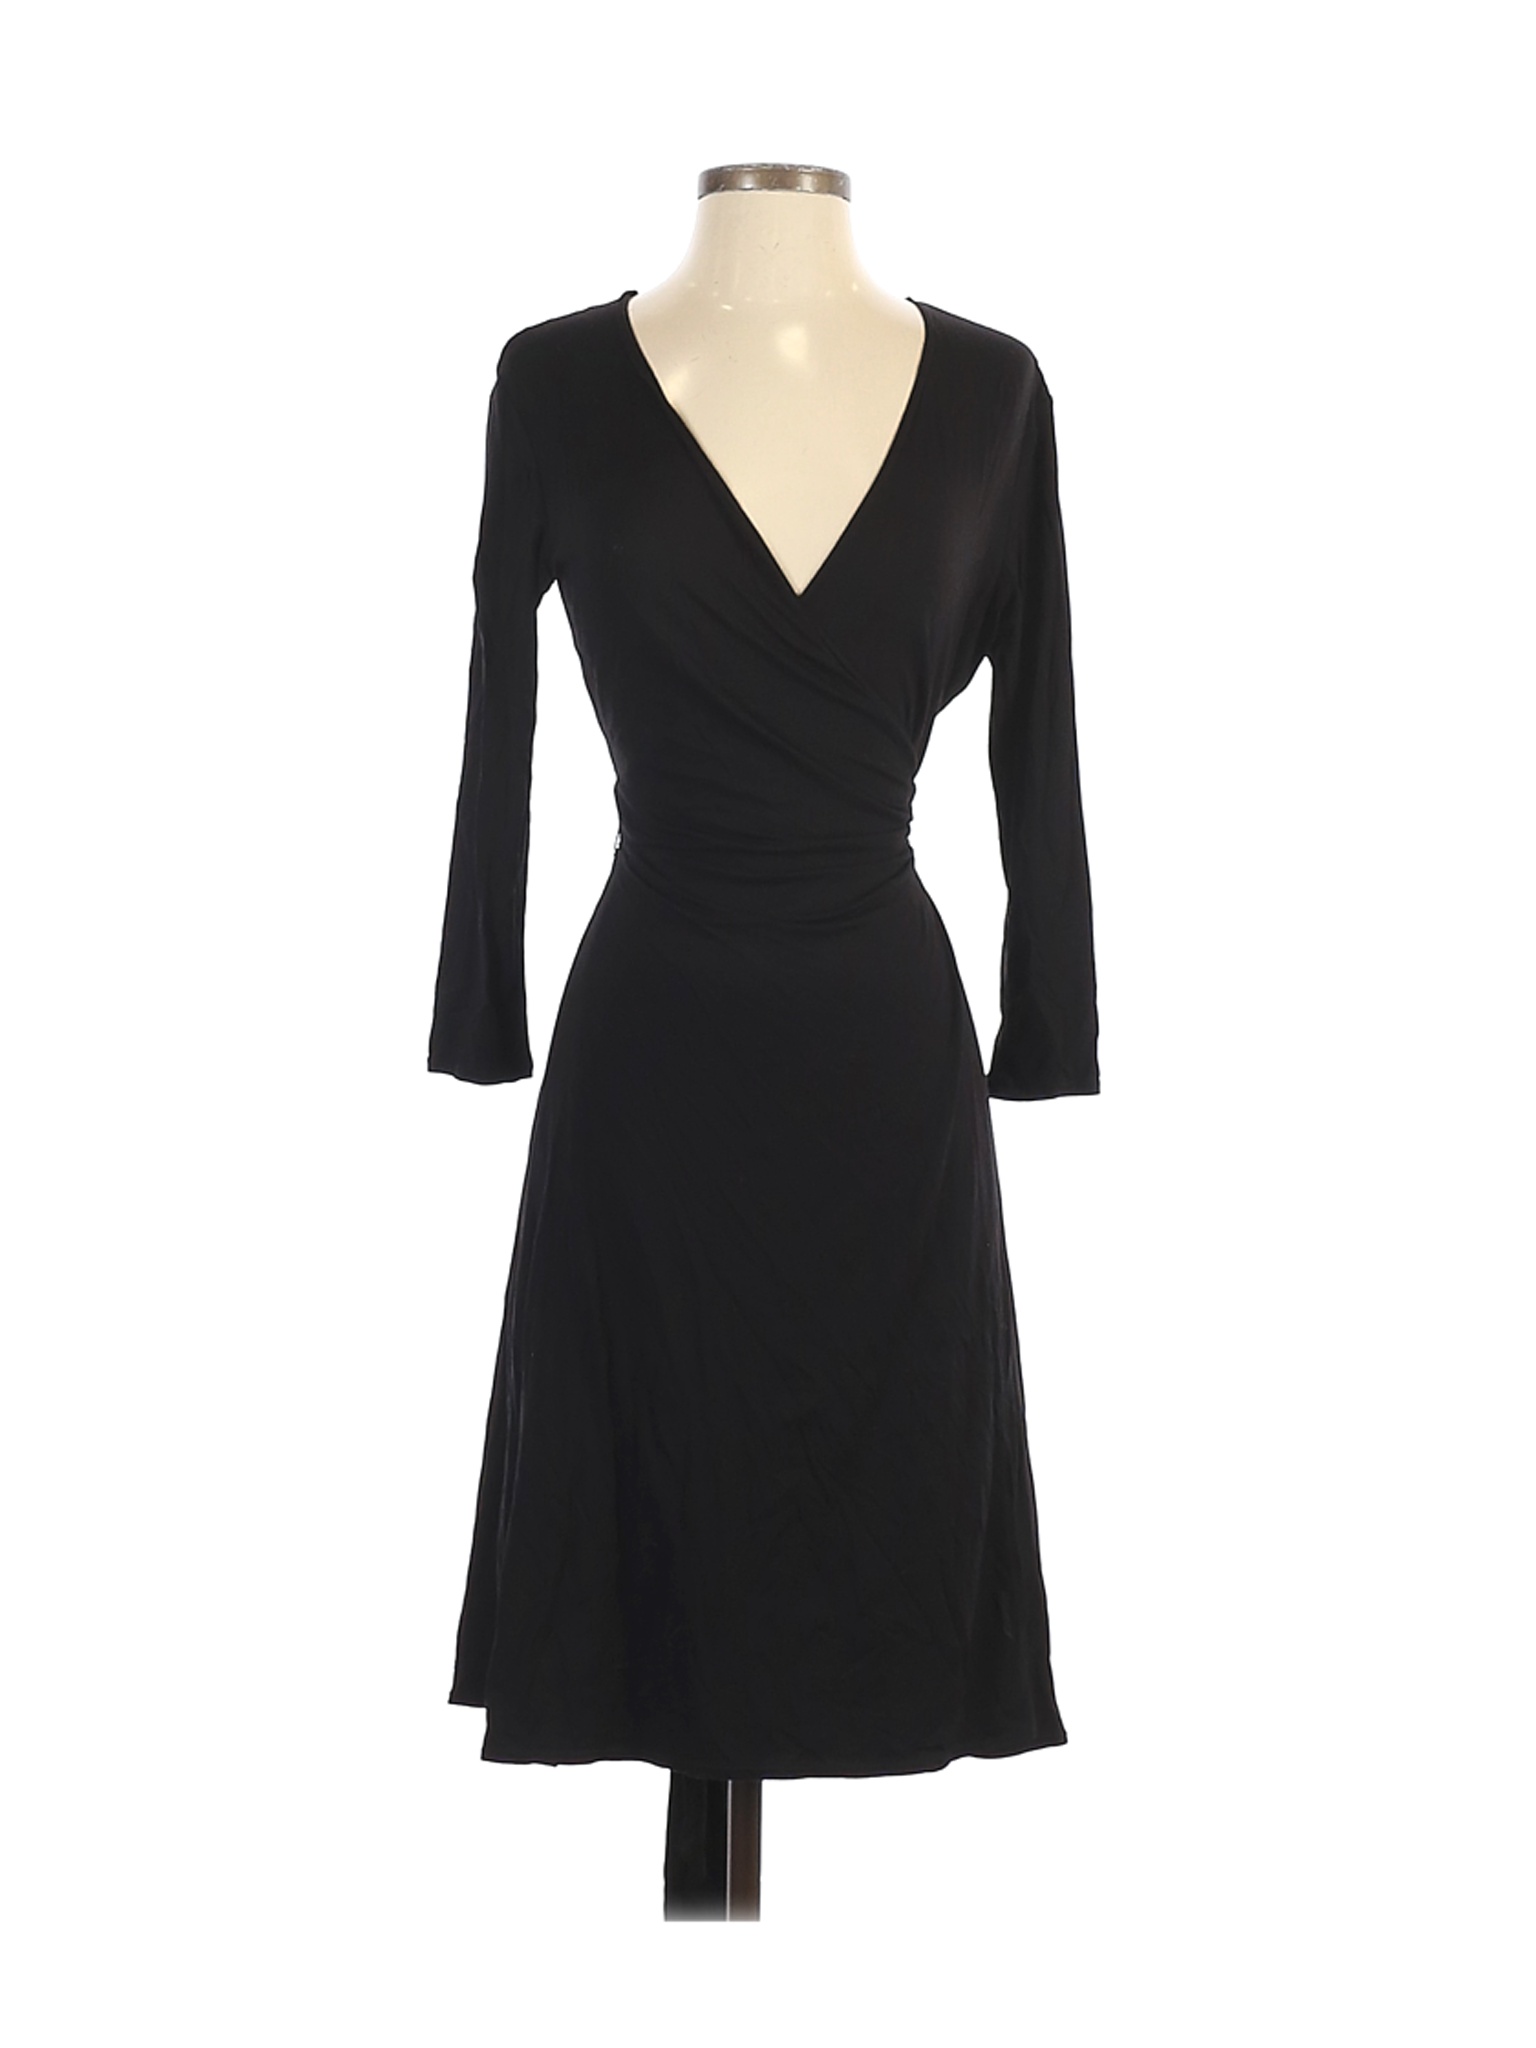 NWT Max Studio Women Black Cocktail Dress S | eBay